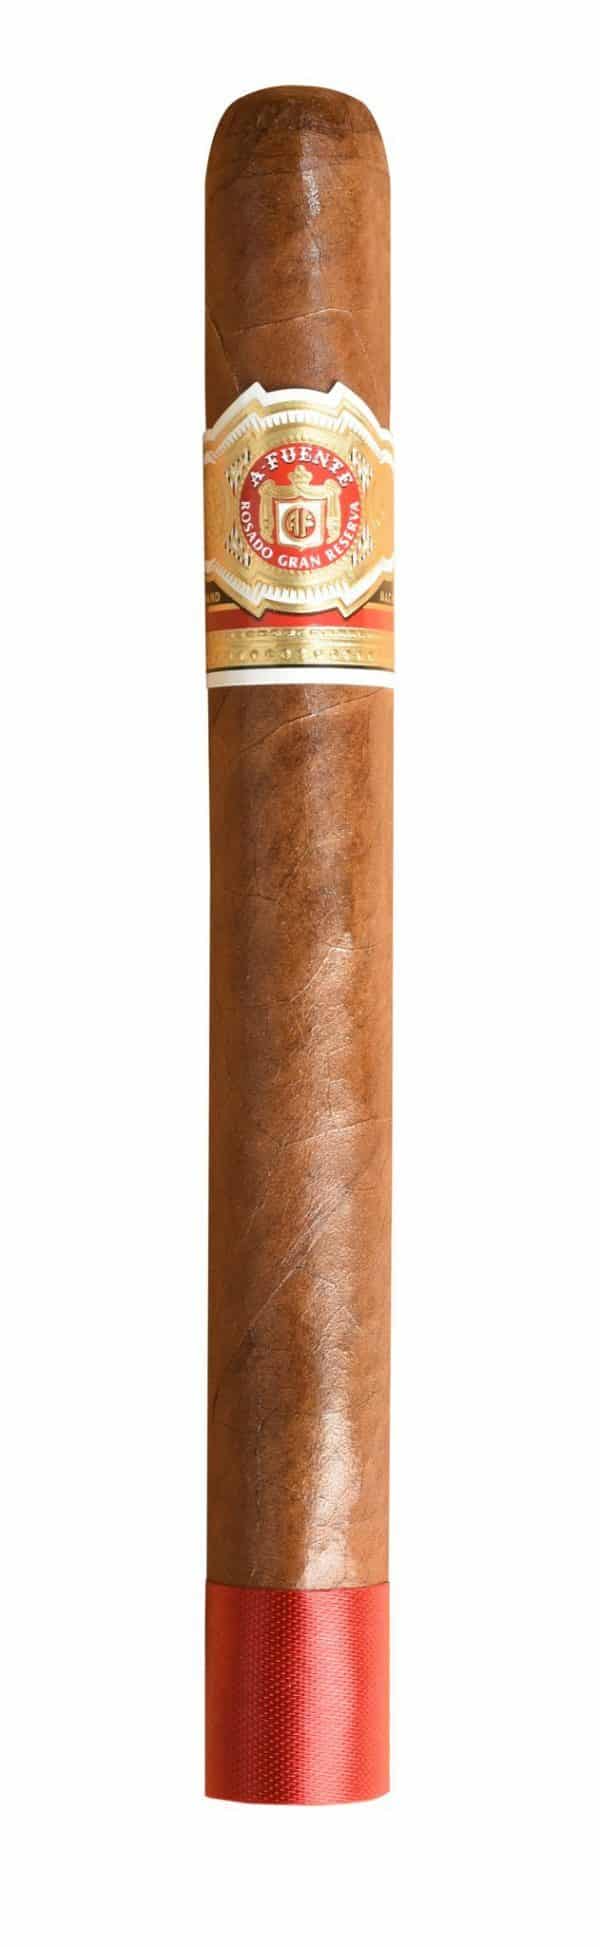 Single Arturo Fuente Chateau King T Rosado Sungrown cigar